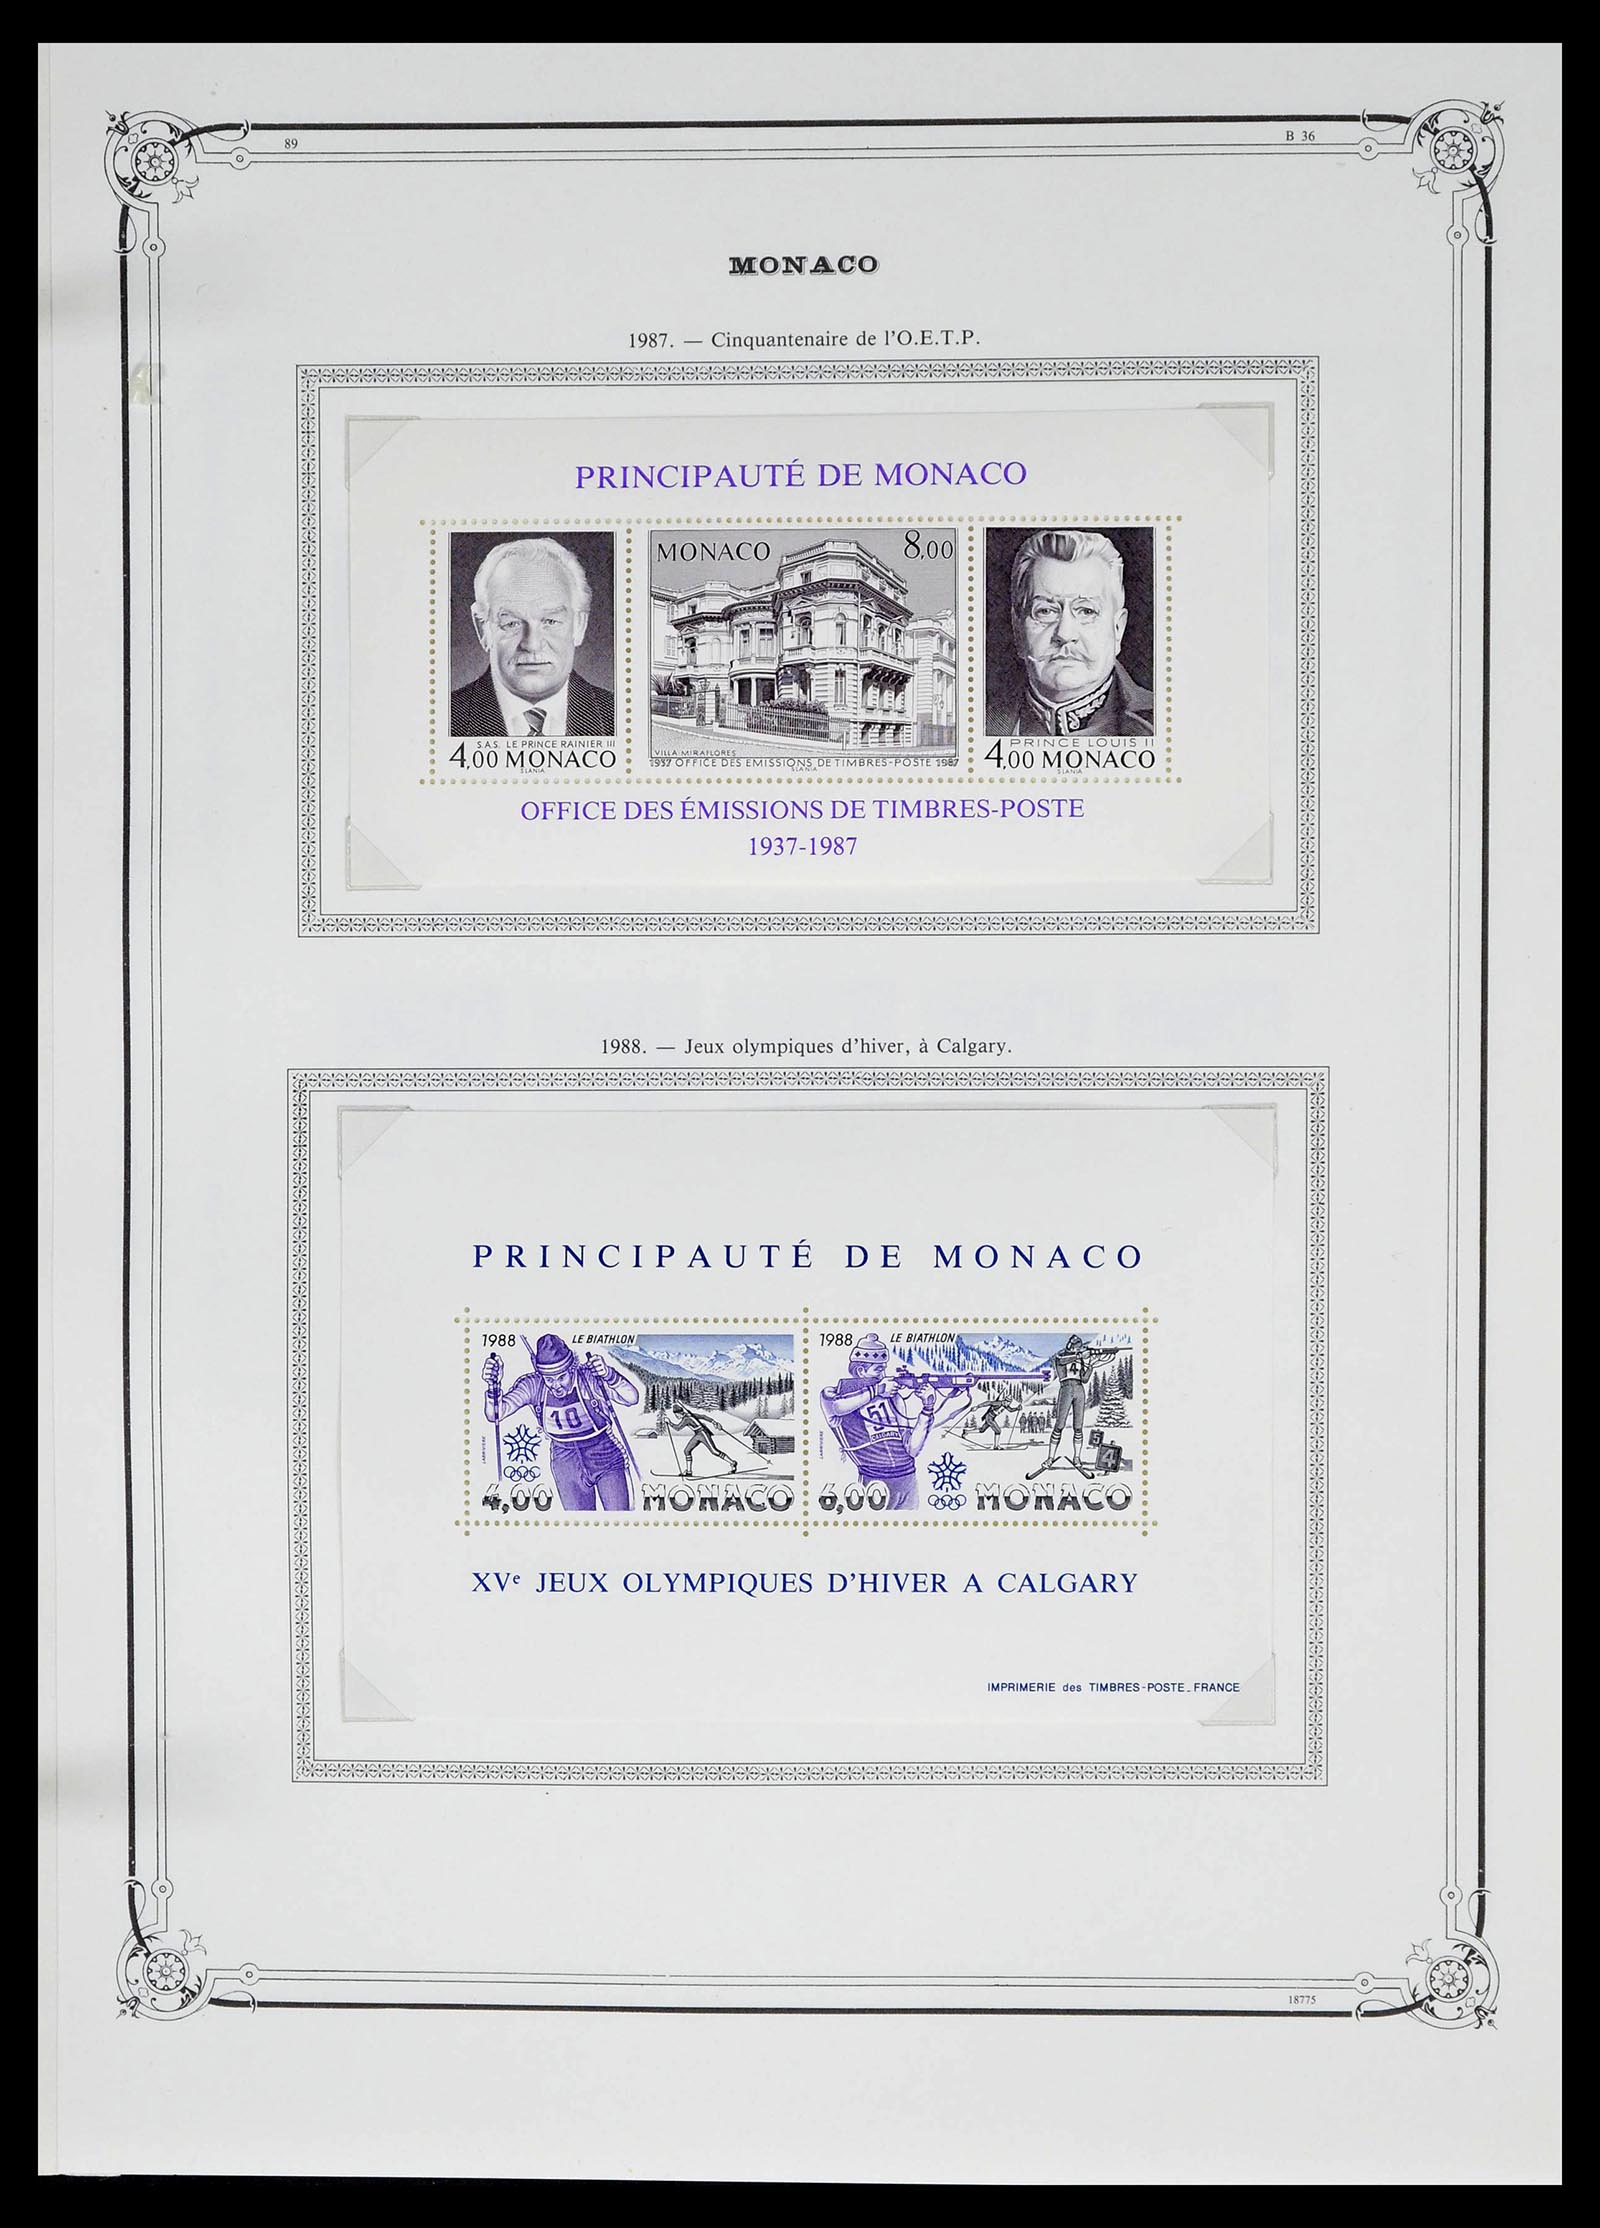 39133 0224 - Stamp collection 39133 Monaco 1885-1996.